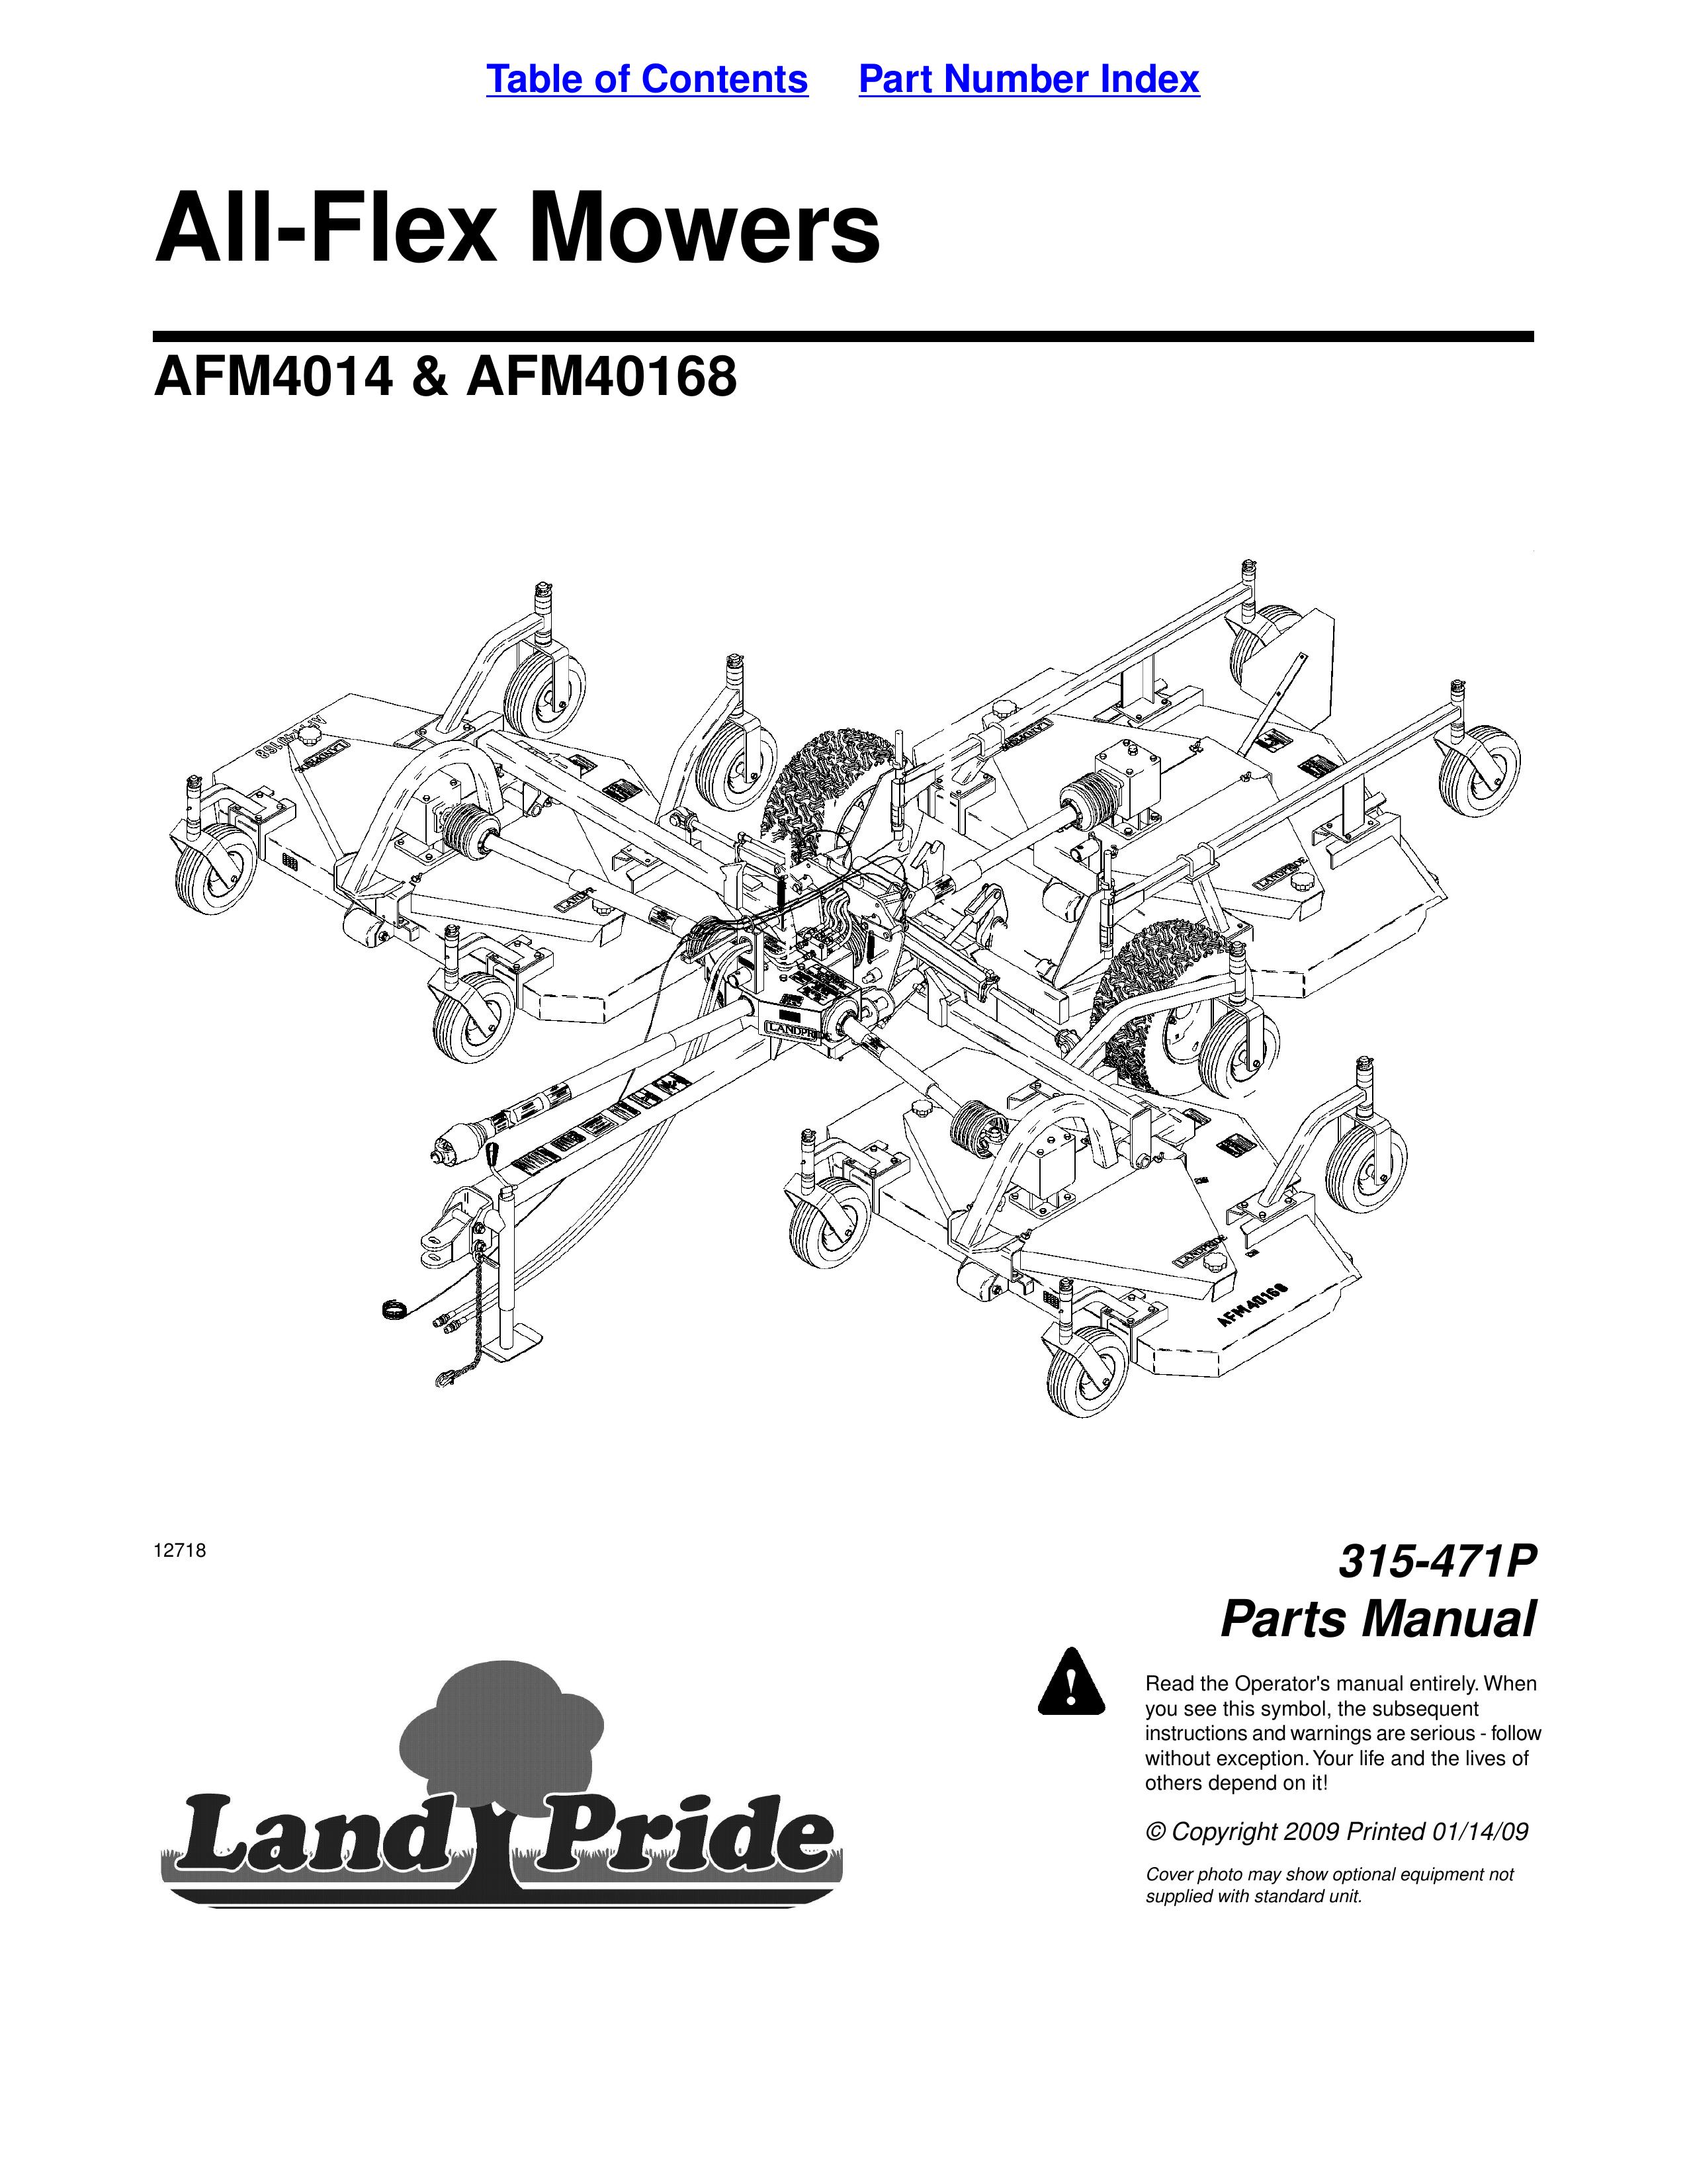 Land Pride AFM40168 Lawn Mower User Manual